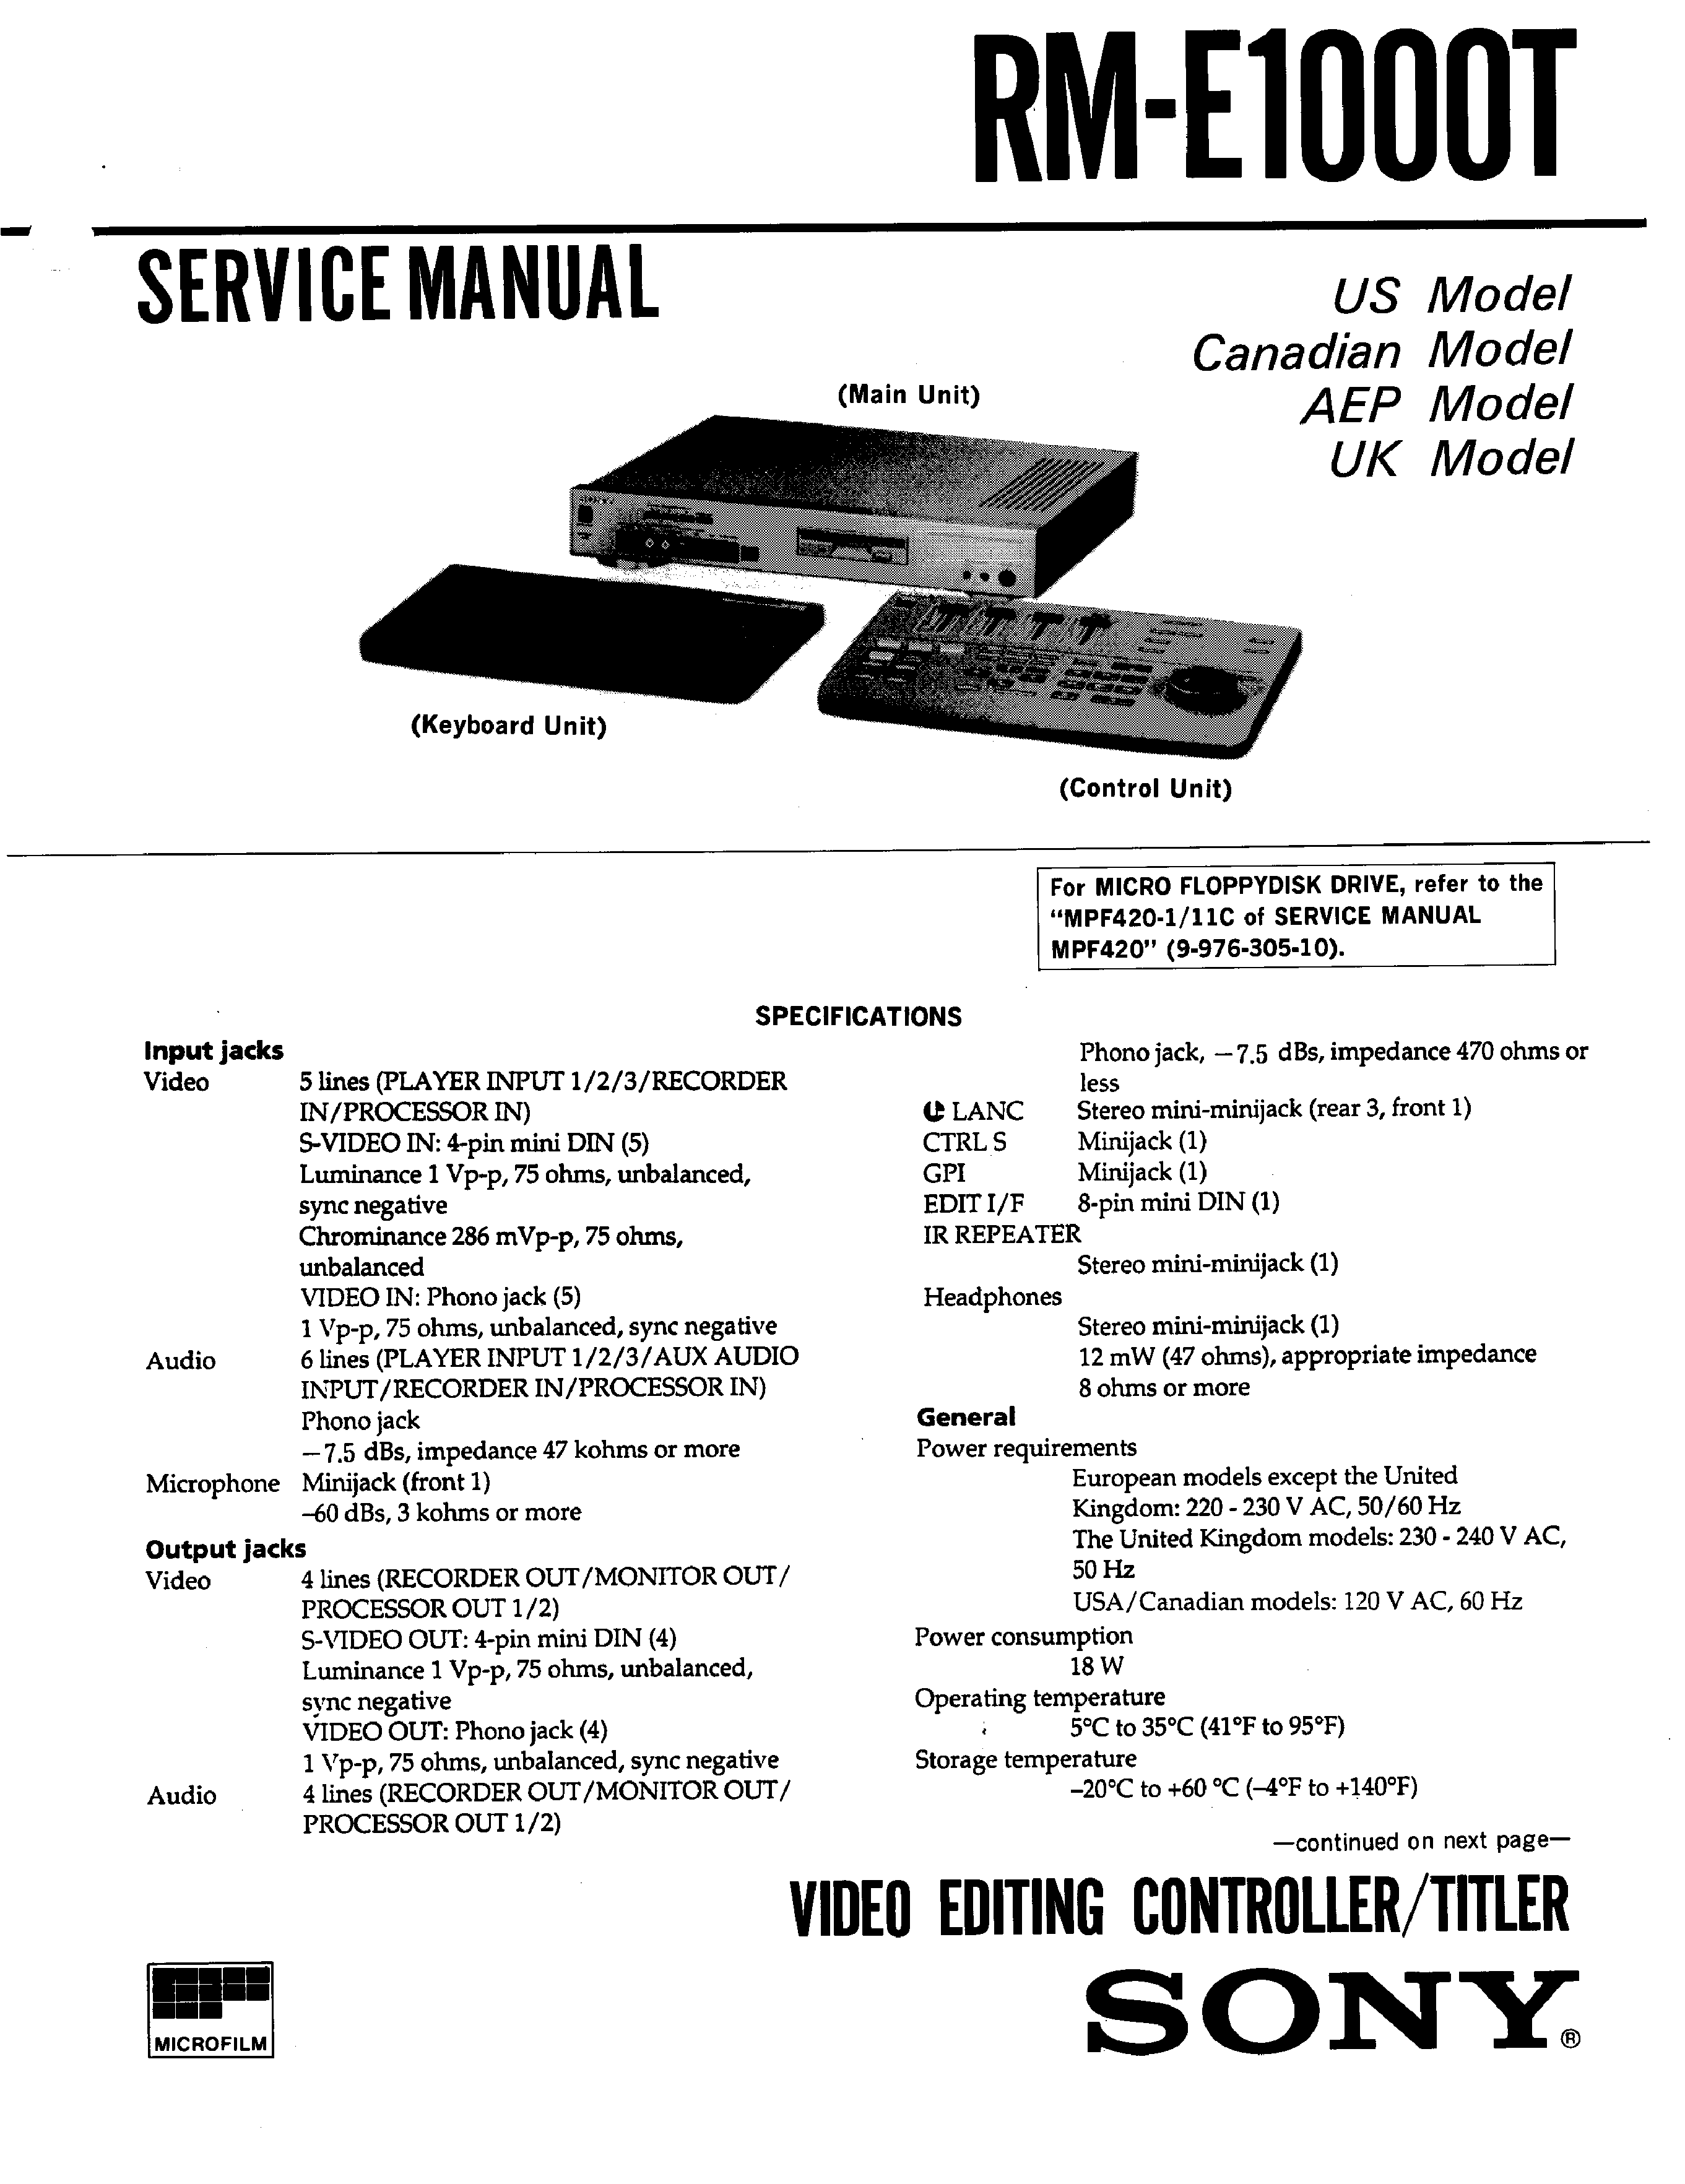 SONY RM-E1000T - Service Manual Immediate Download